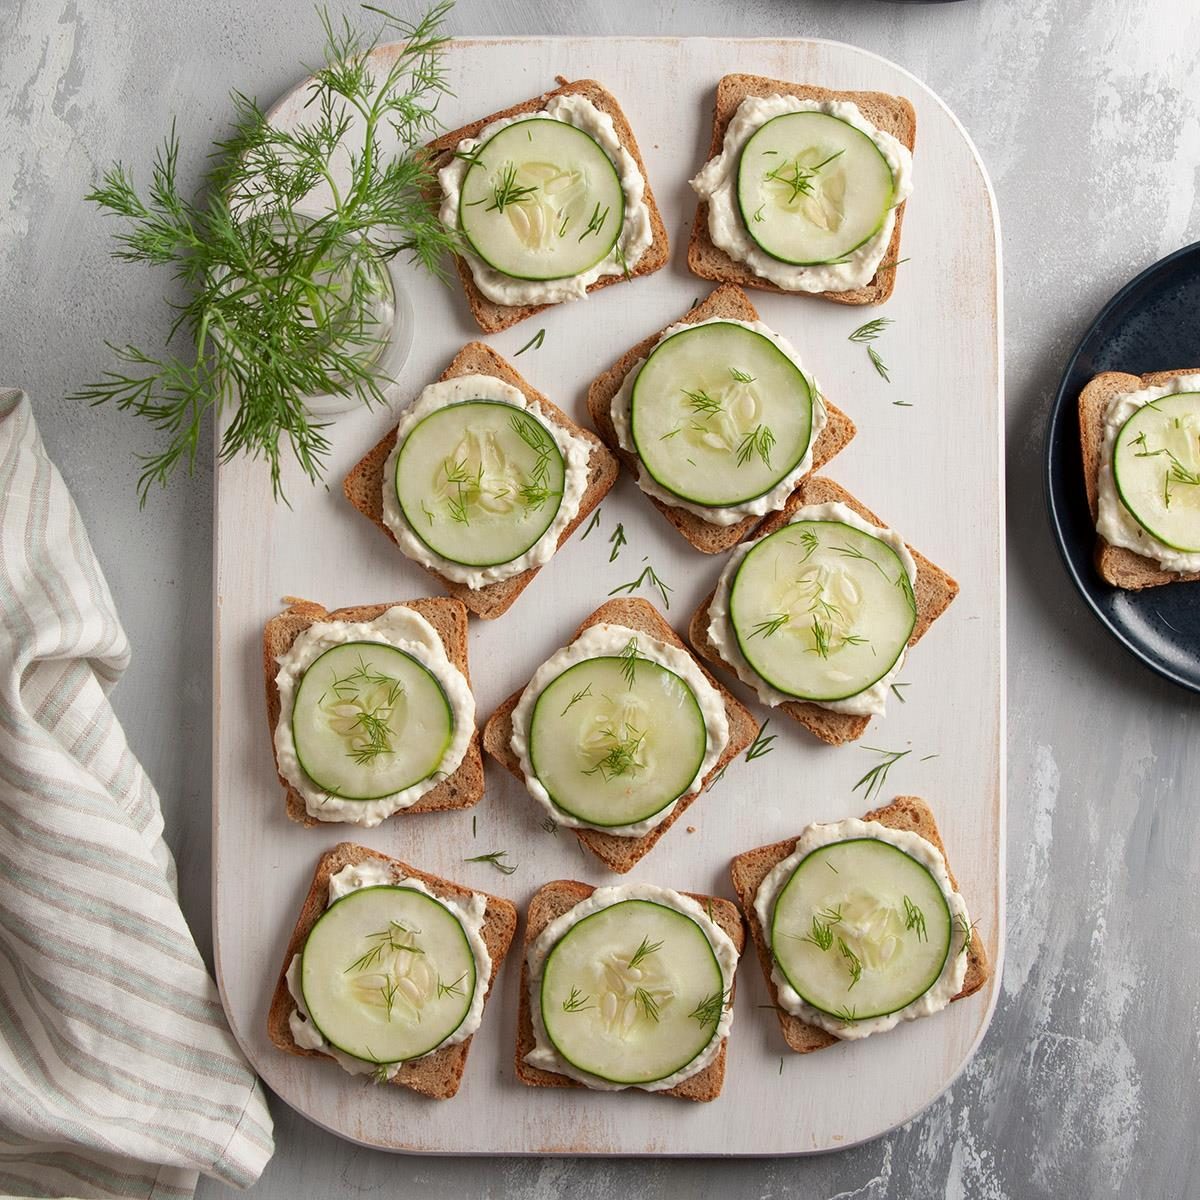 https://www.tasteofhome.com/wp-content/uploads/2018/01/Savory-Cucumber-Sandwiches_EXPS_FT20_36534_F_0713_1.jpg